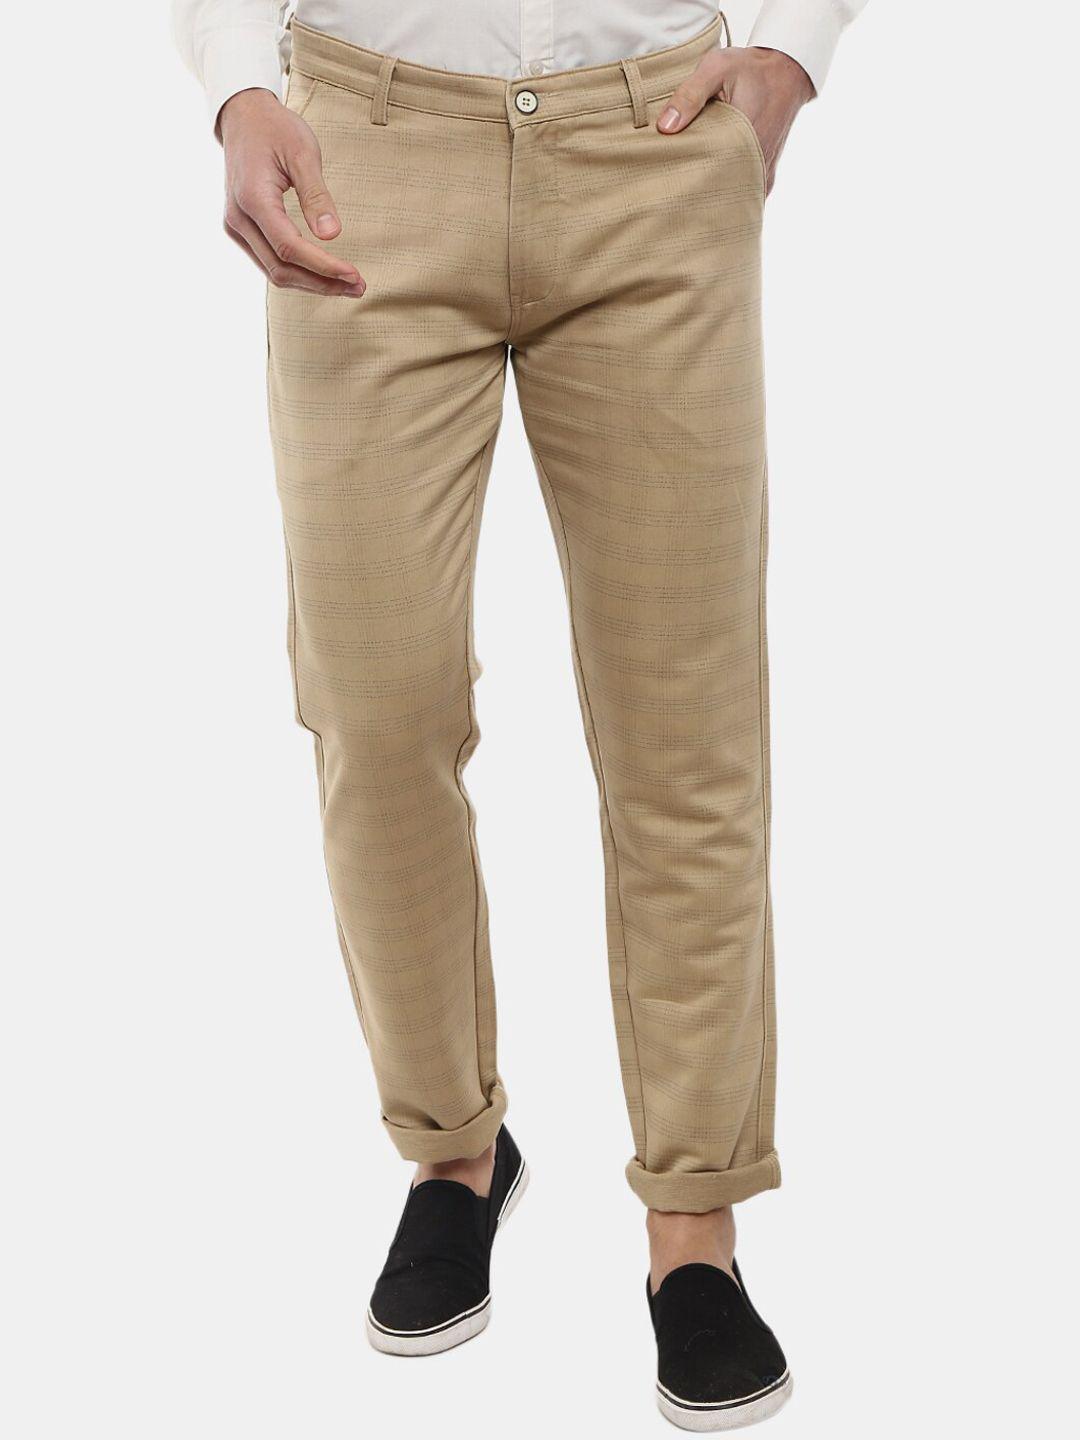 v-mart-men-khaki-classic-slim-fit-chinos-trousers